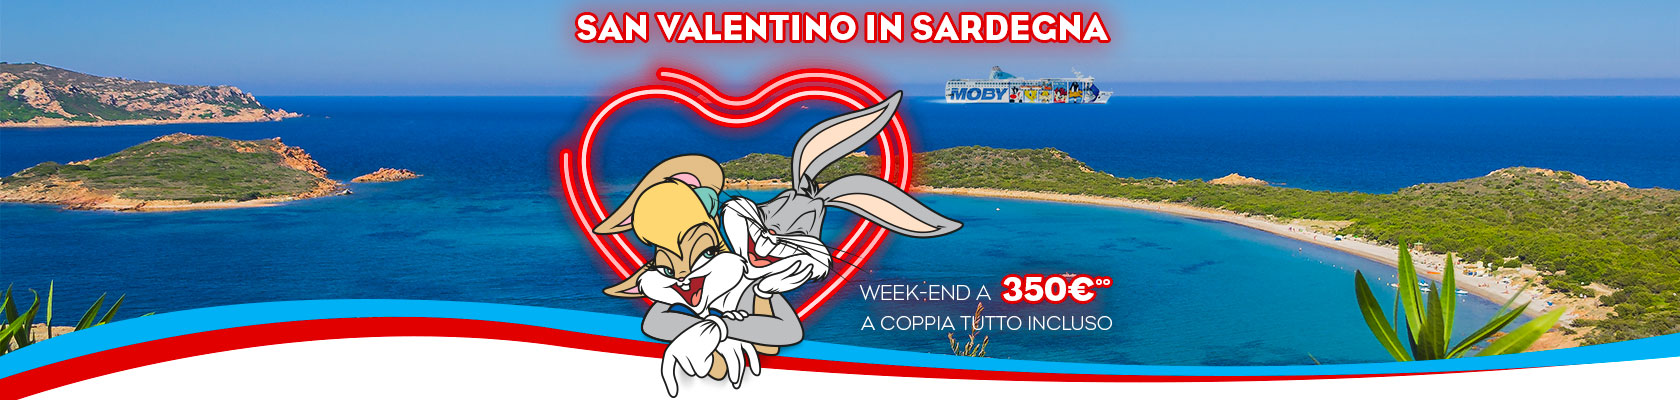 weekend di San Valentino in Sardegna